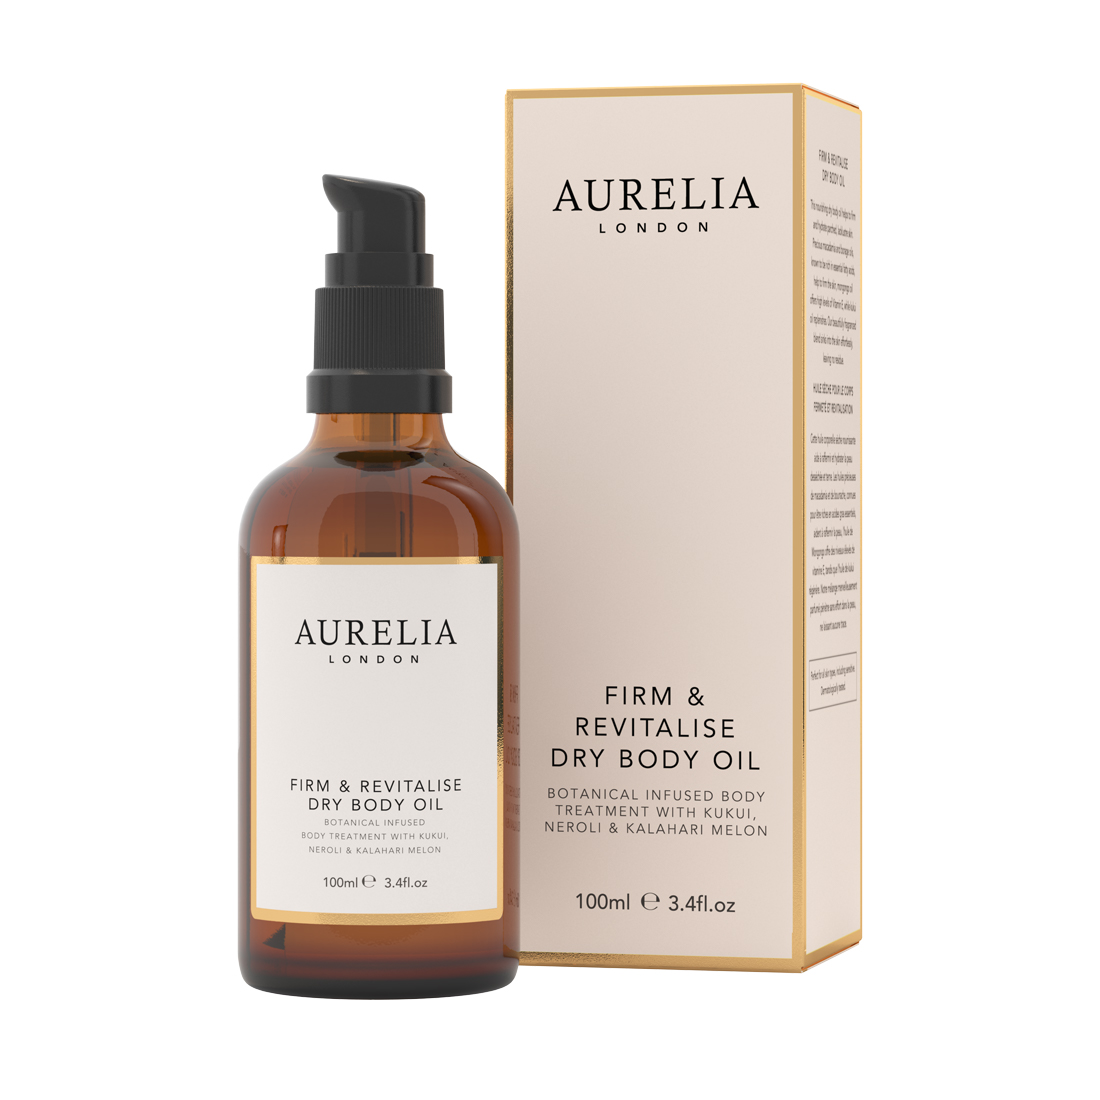 An image of Aurelia London, Firm & Revitalise Dry Body Oil, 100ml